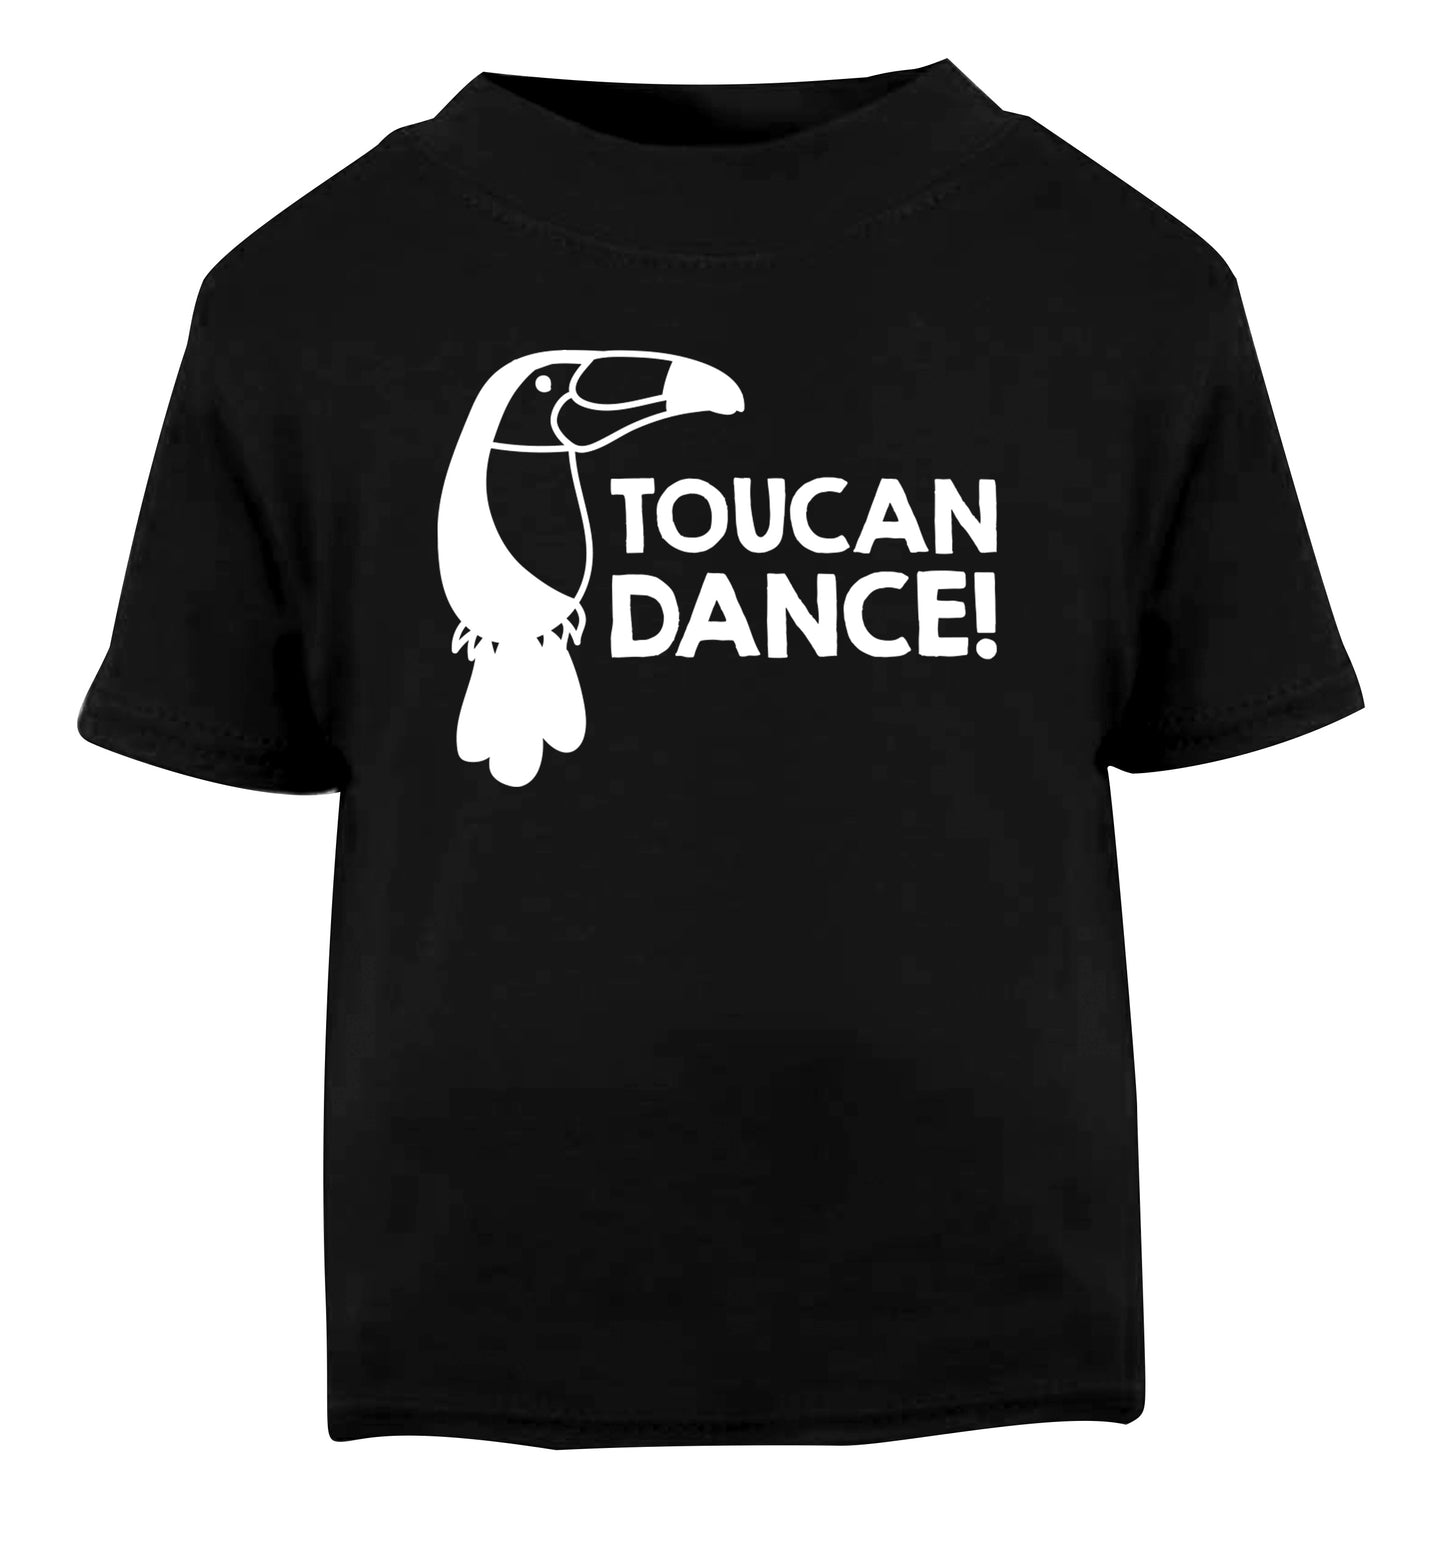 Toucan dance Black Baby Toddler Tshirt 2 years